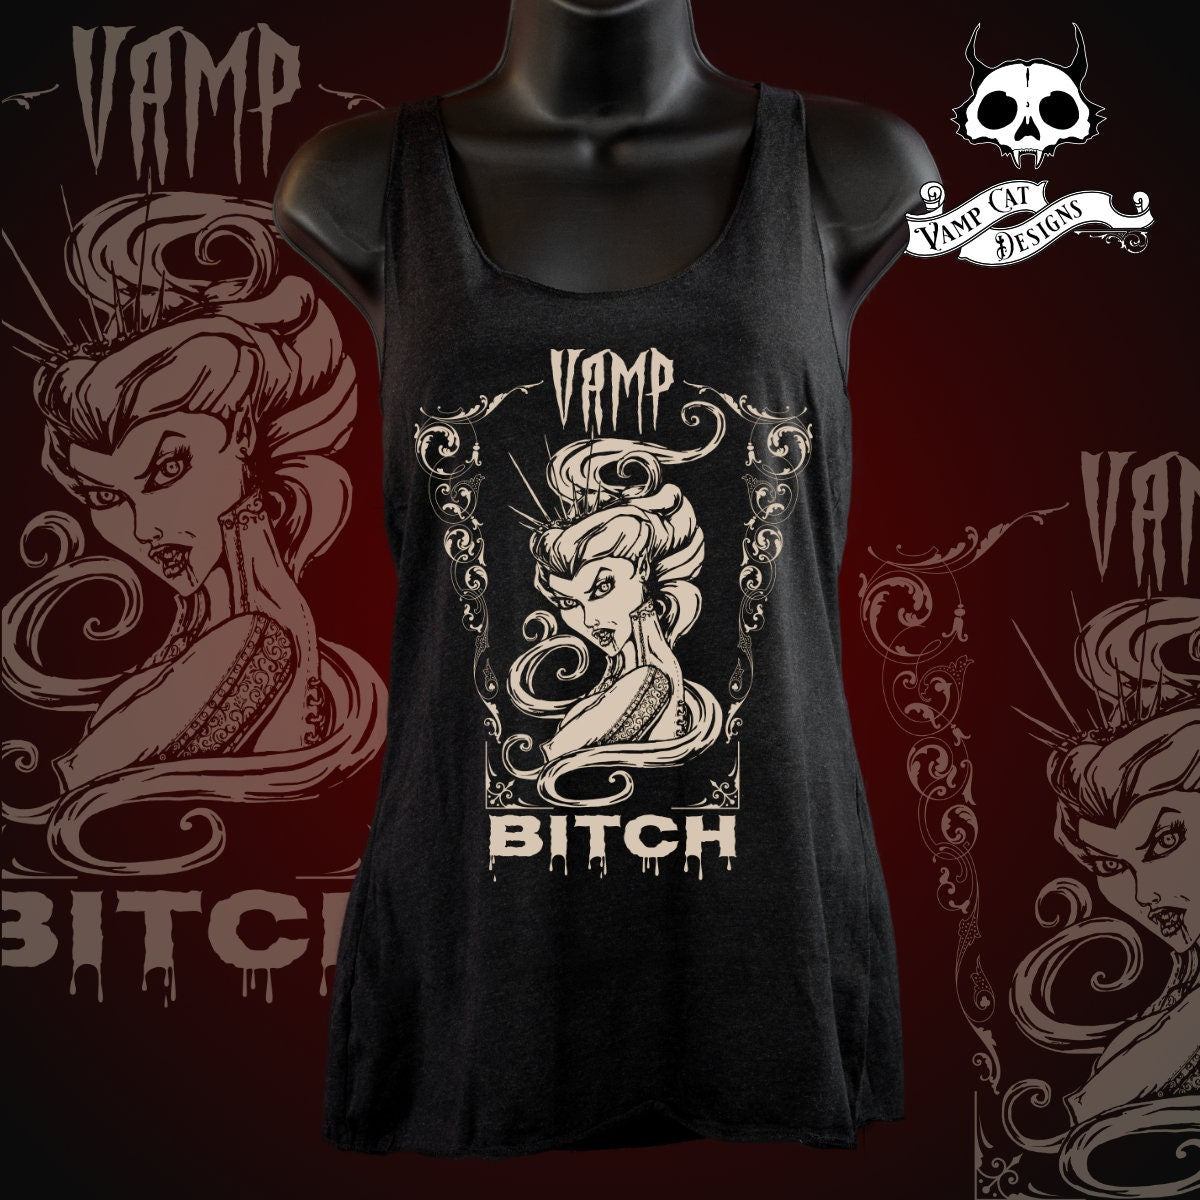 Vamp Bitch-Tank Top-Racer Back-Vampire Illustration-Witchy-Dark Apparel-Dark Humor-Women's Top-Gothic Art-Vampire Tank Top